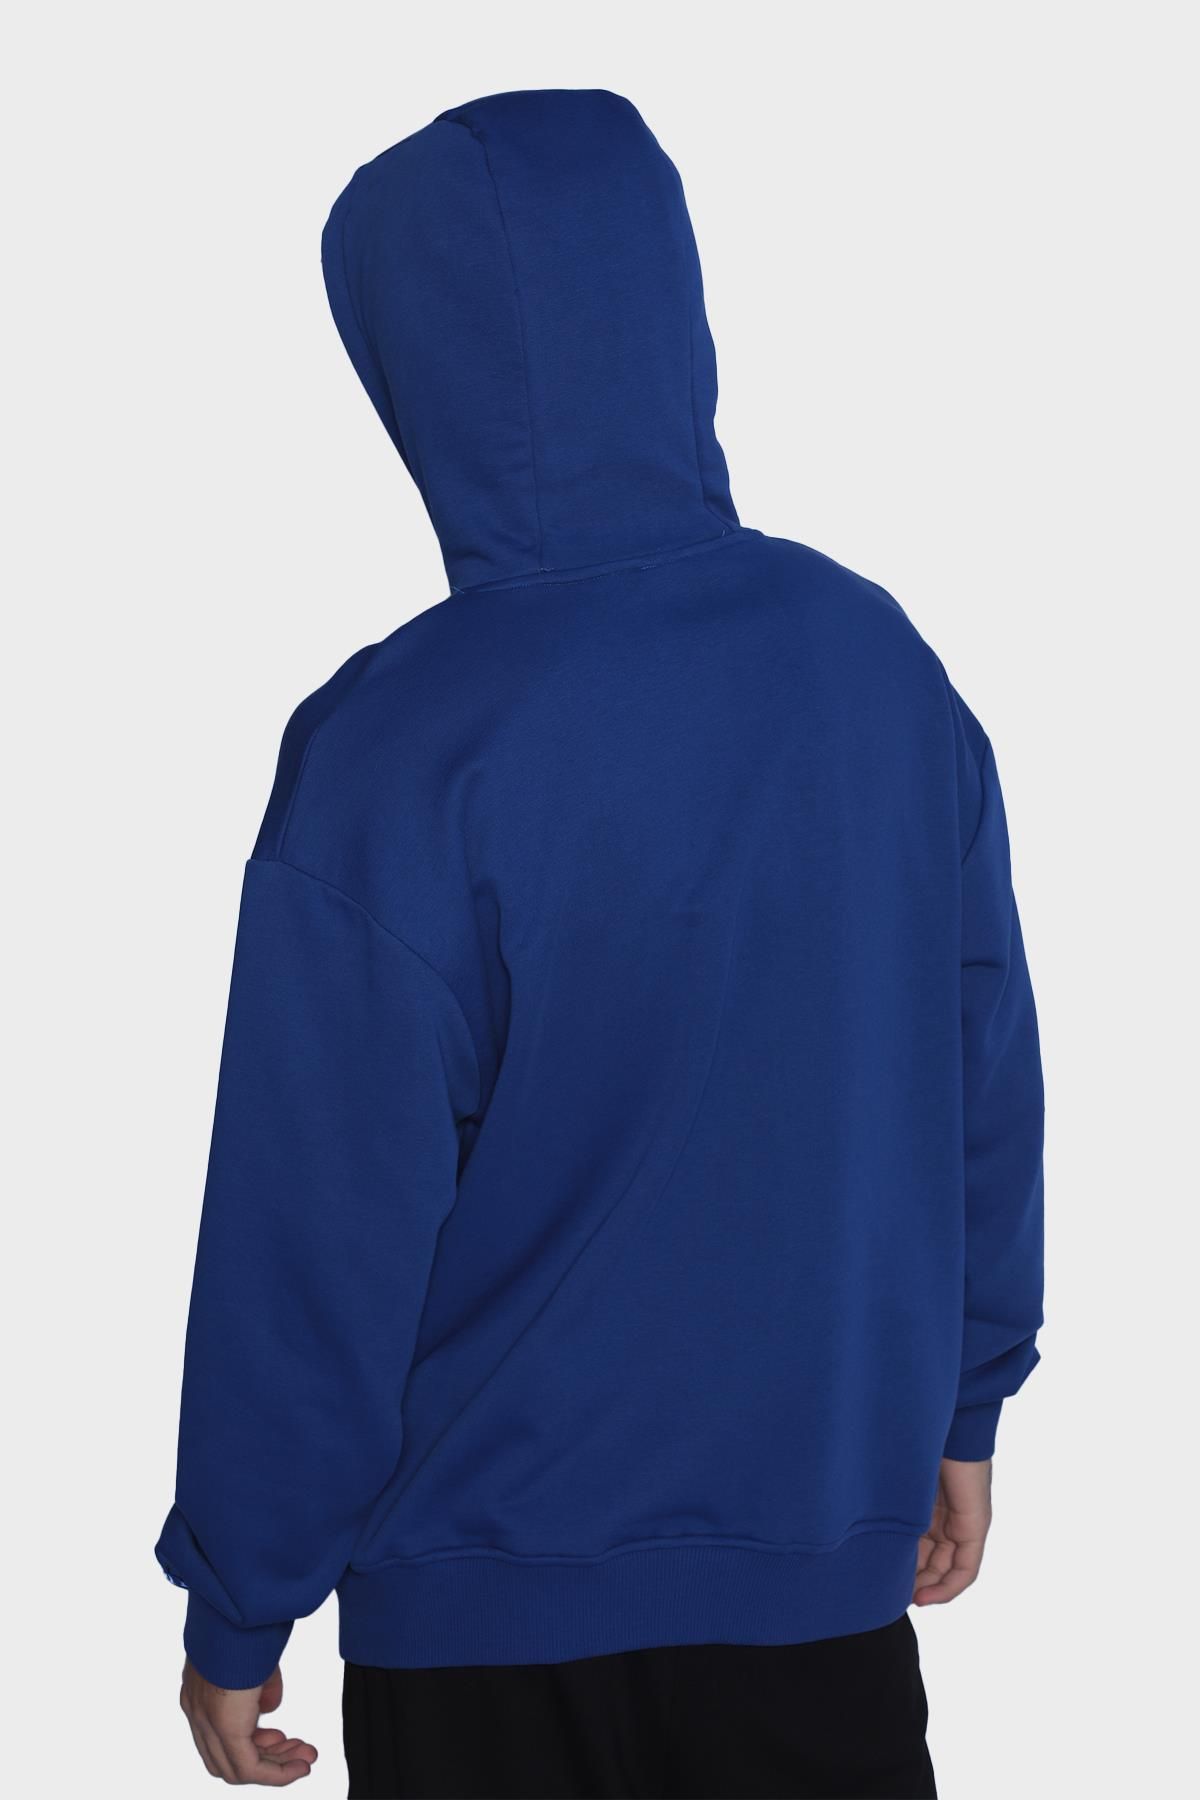 Mens hooded and long-sleeved sweatshirt - Sax blue